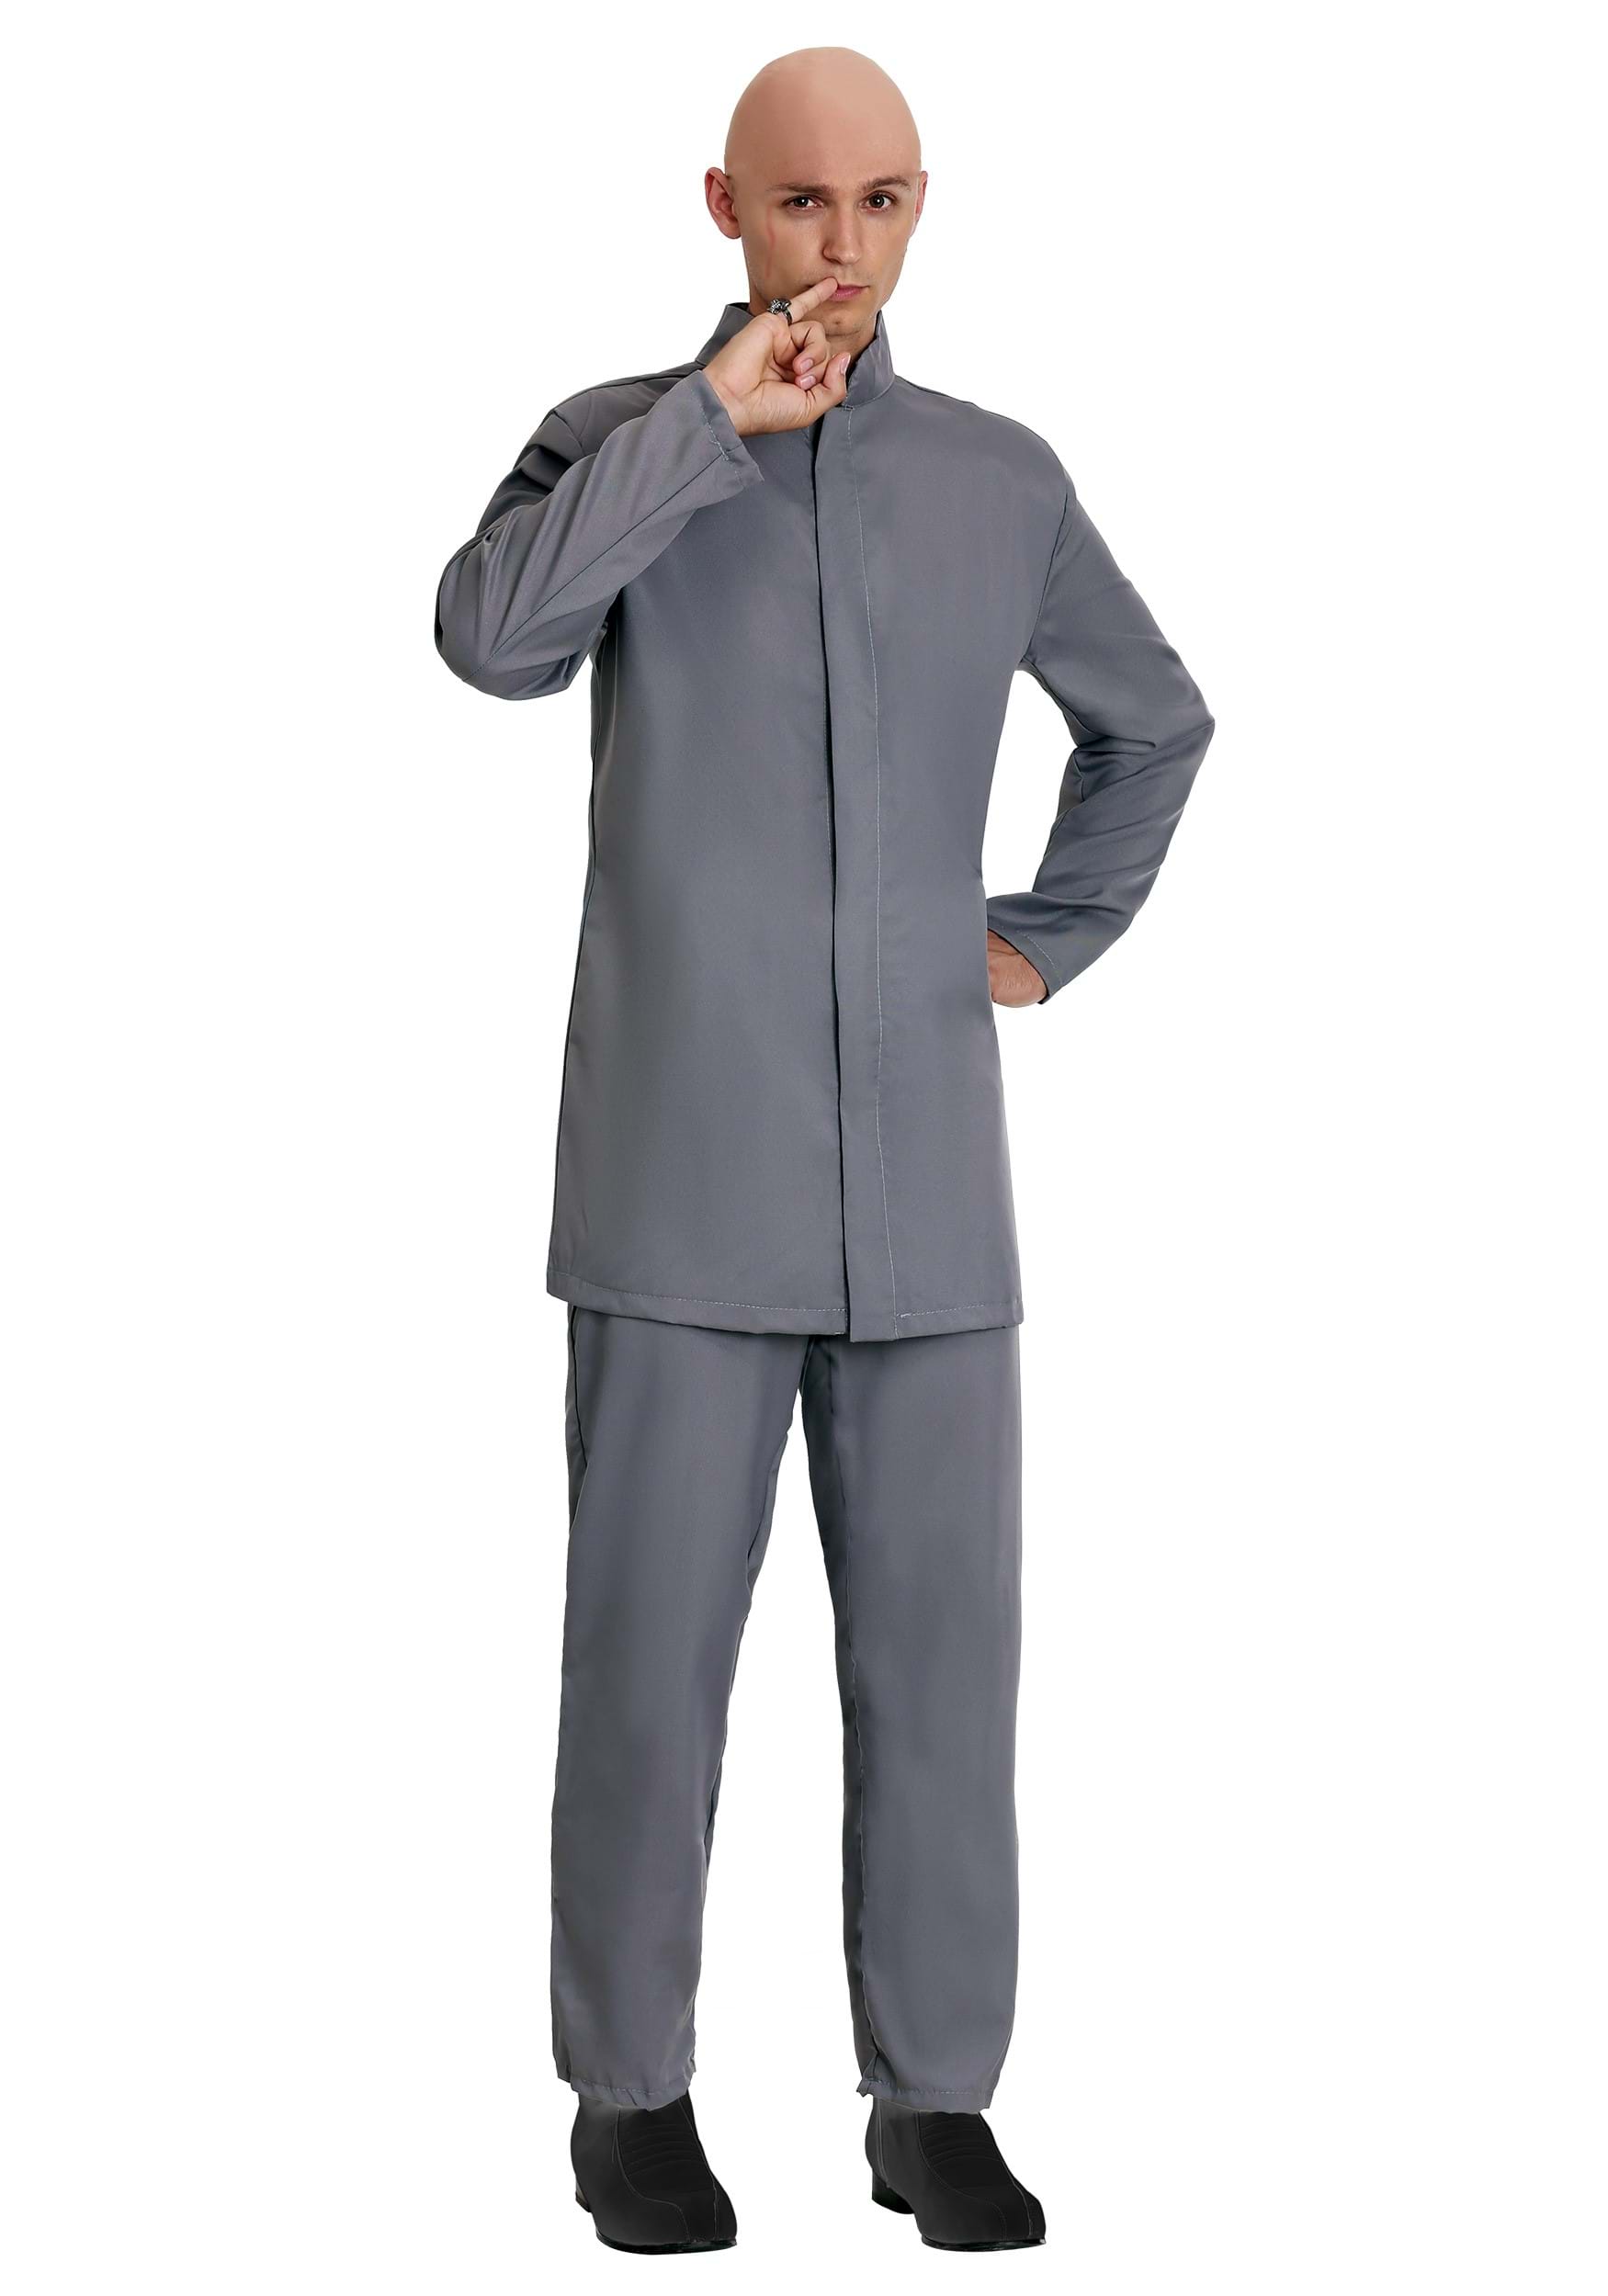 Deluxe Adult Gray Suit Costume | Austin Powers Costume